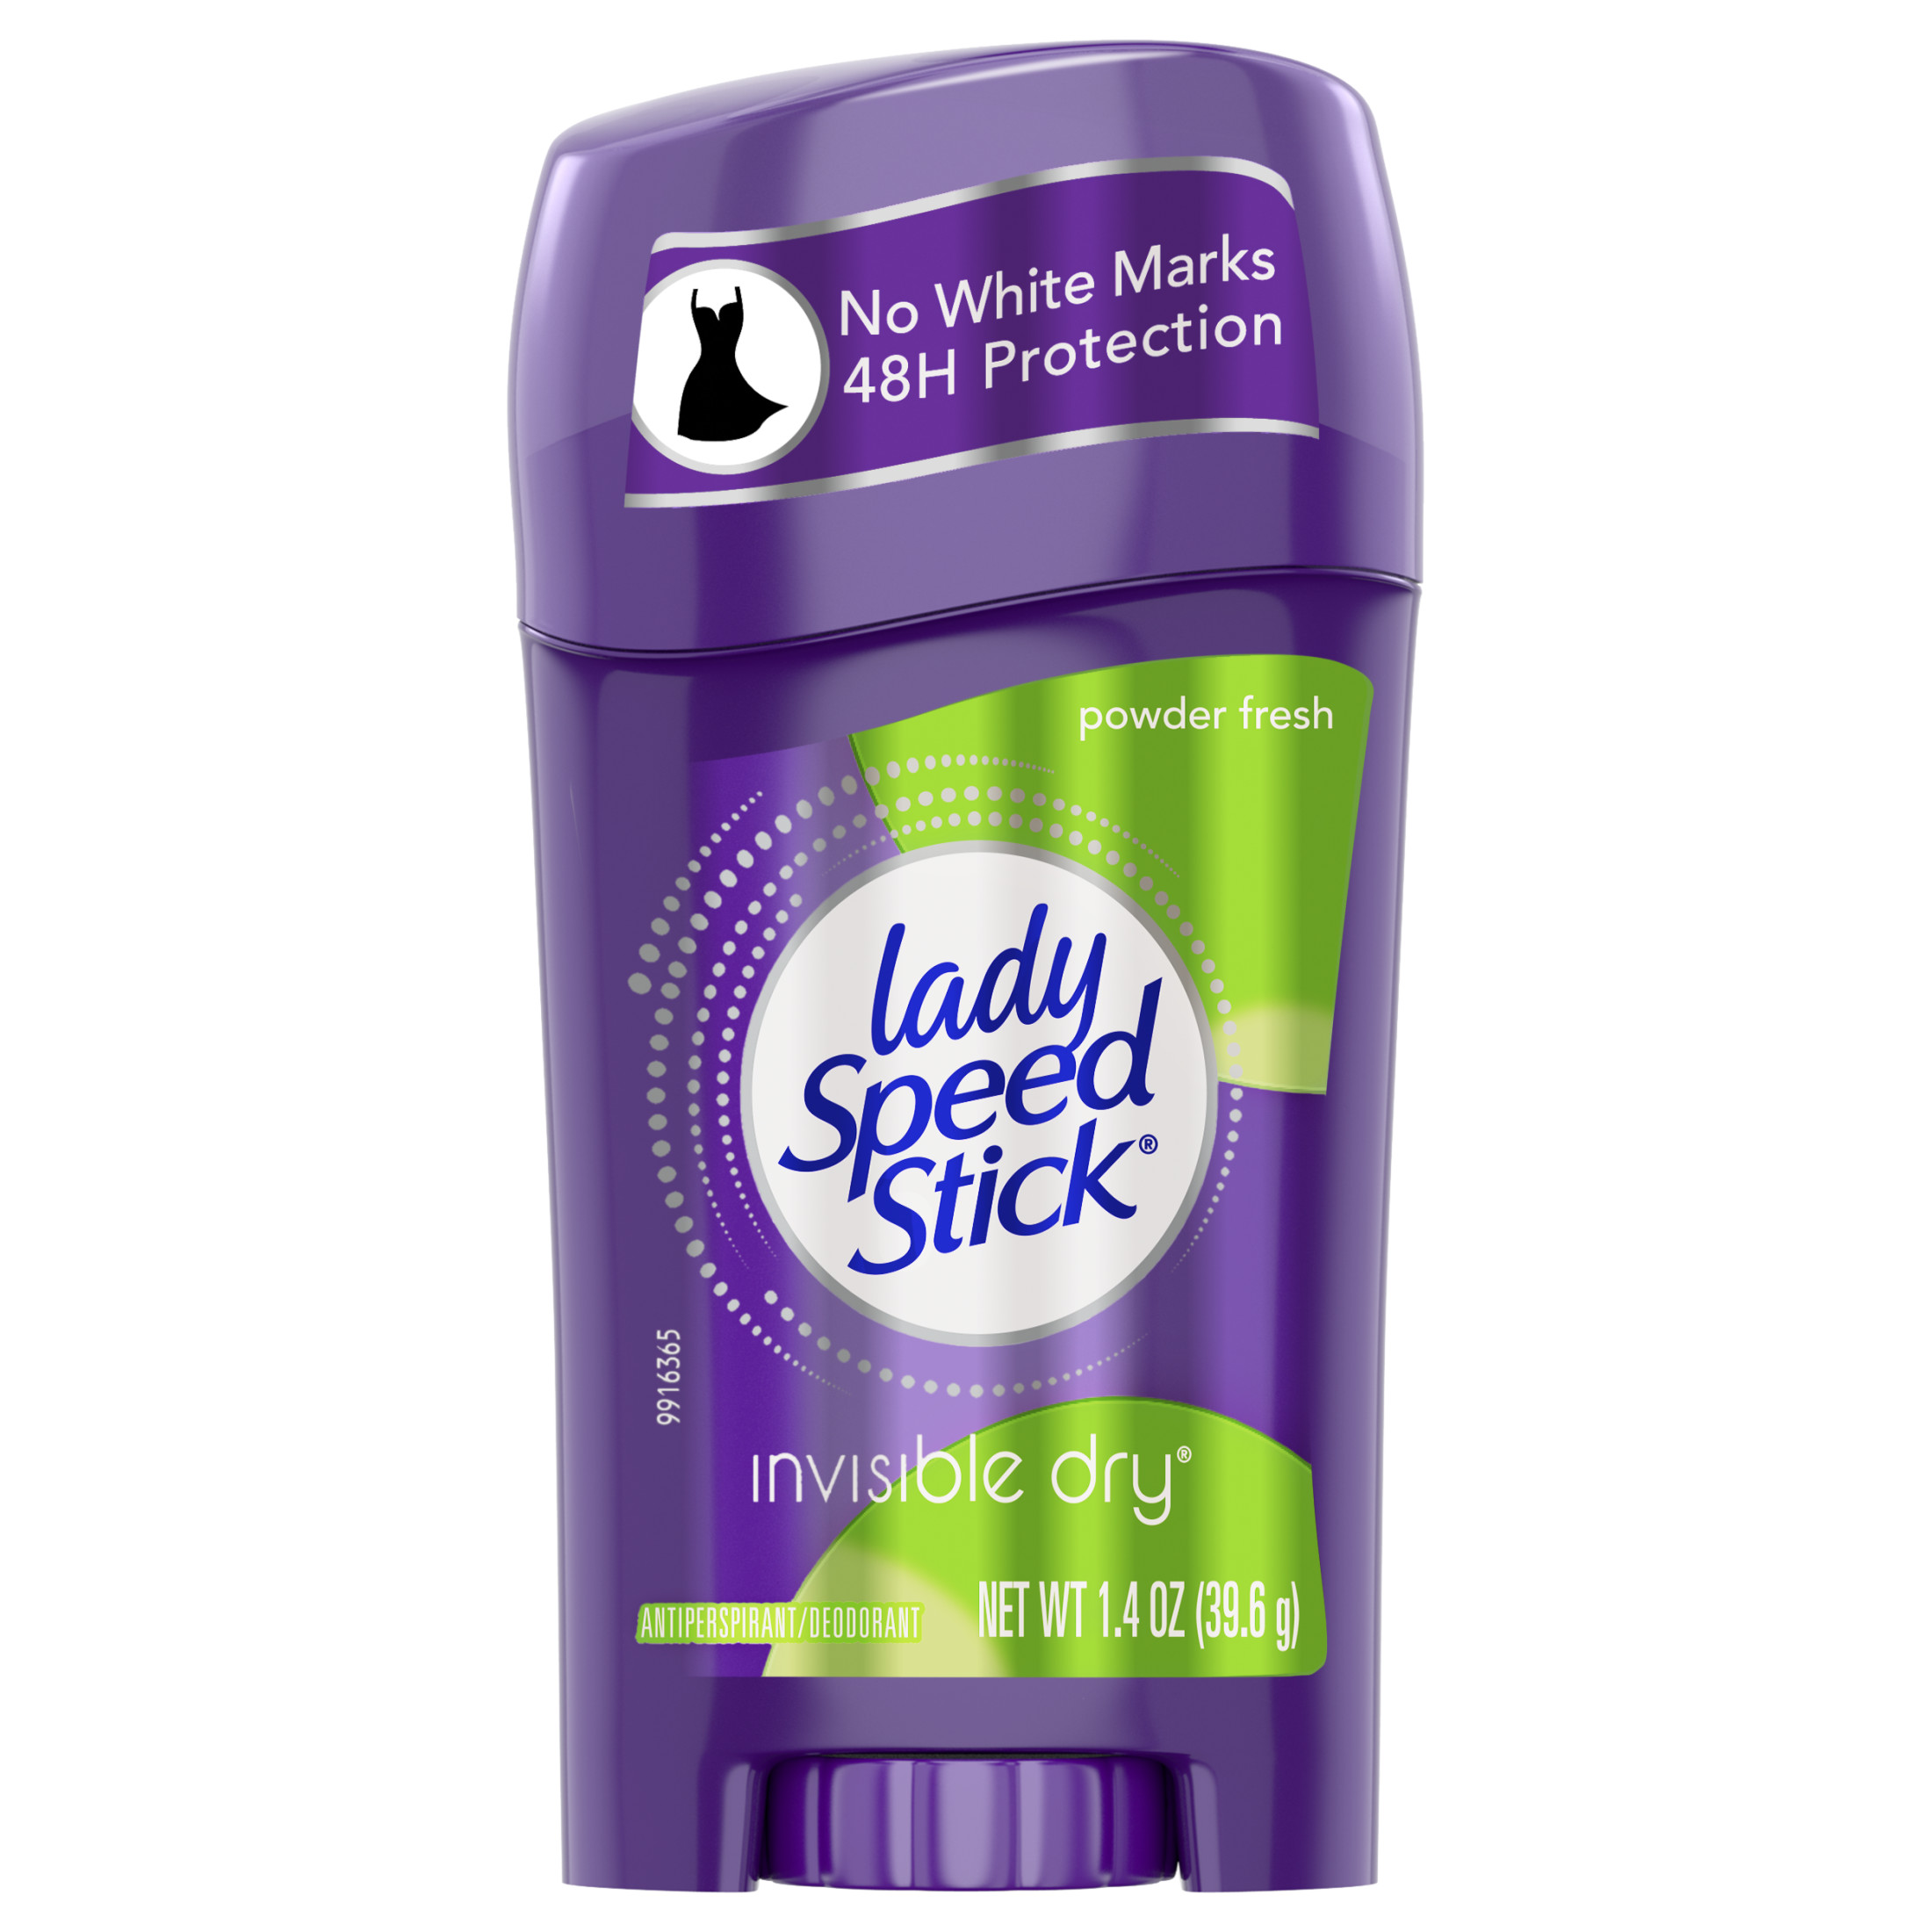 Lady Speed Stick Invisible Dry Antiperspirant Deodorant, Powder Fresh, 1.4oz - image 1 of 15